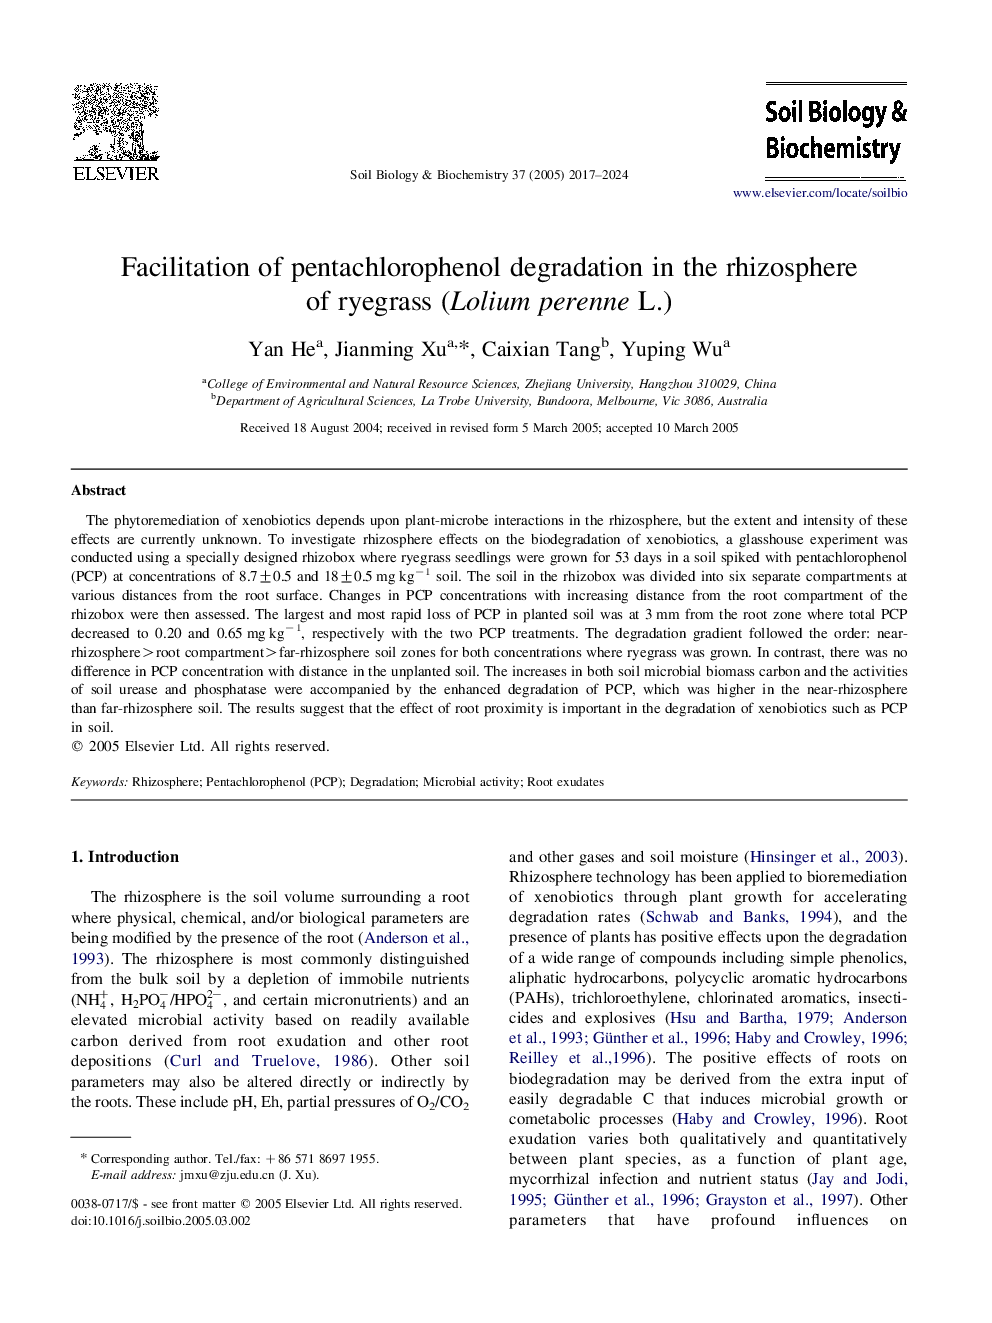 Facilitation of pentachlorophenol degradation in the rhizosphere of ryegrass (Lolium perenne L.)